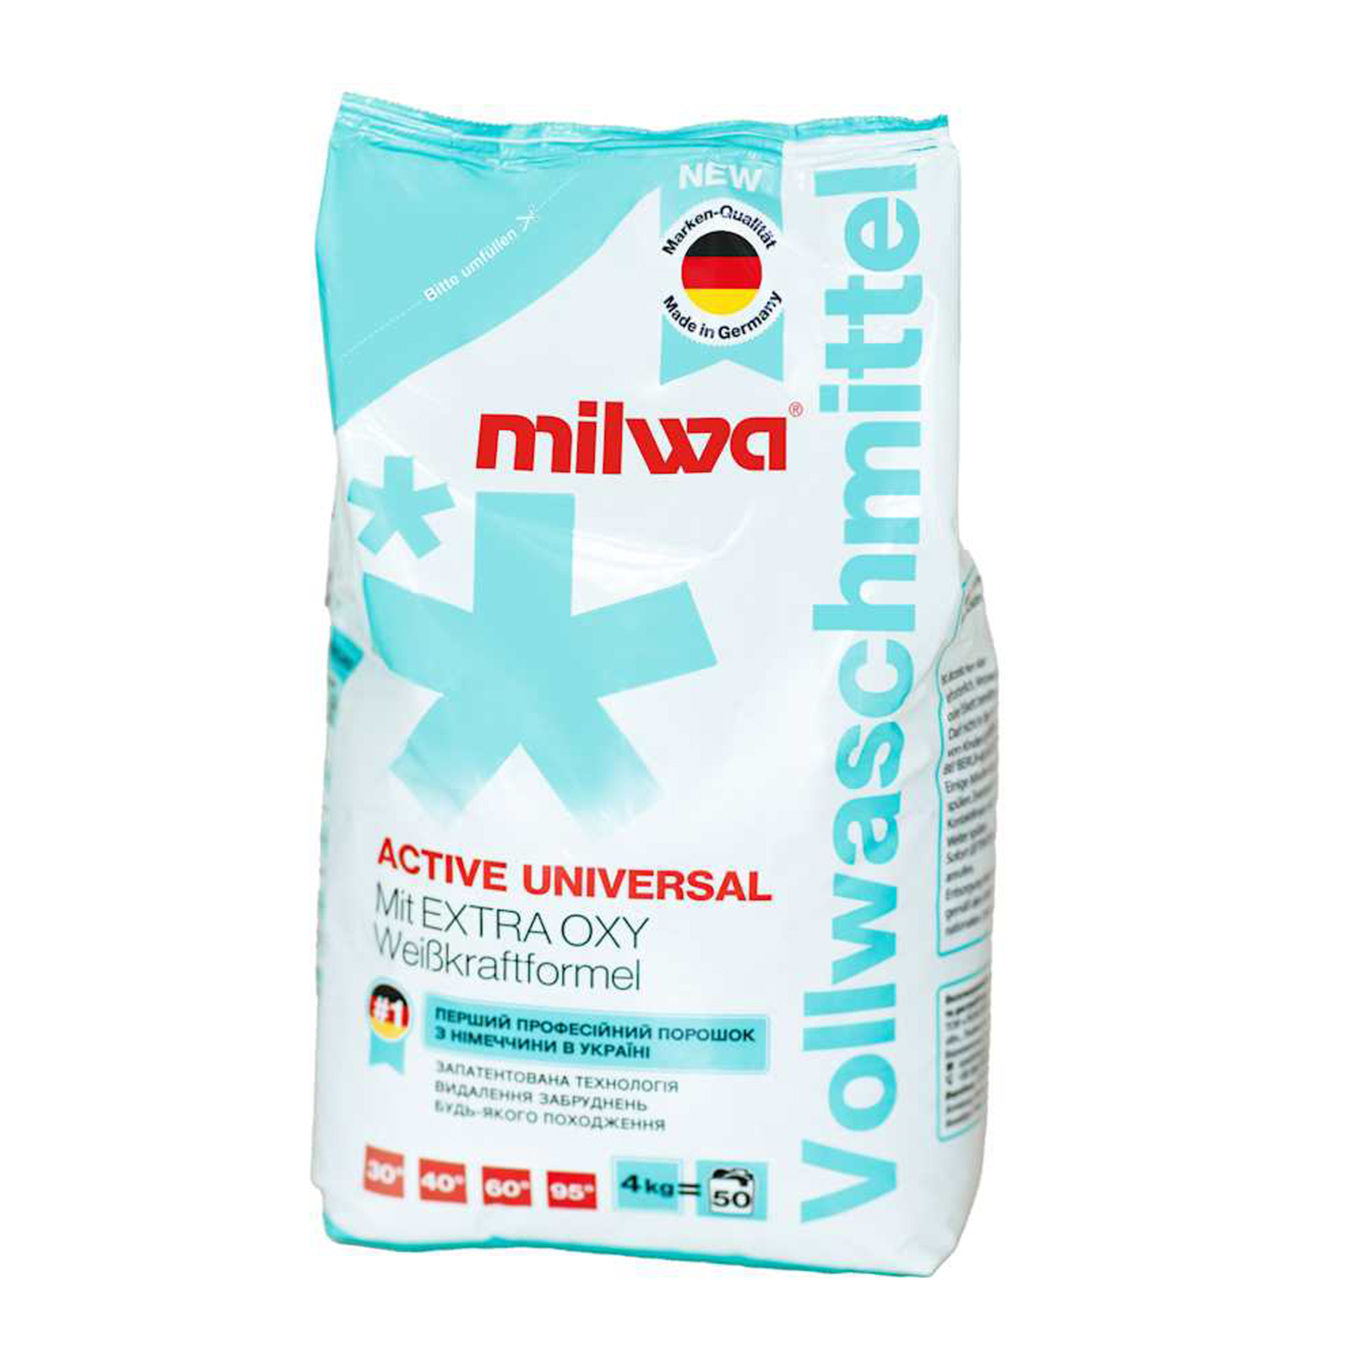 Powder Milwa Active Universal for washing 4 kg